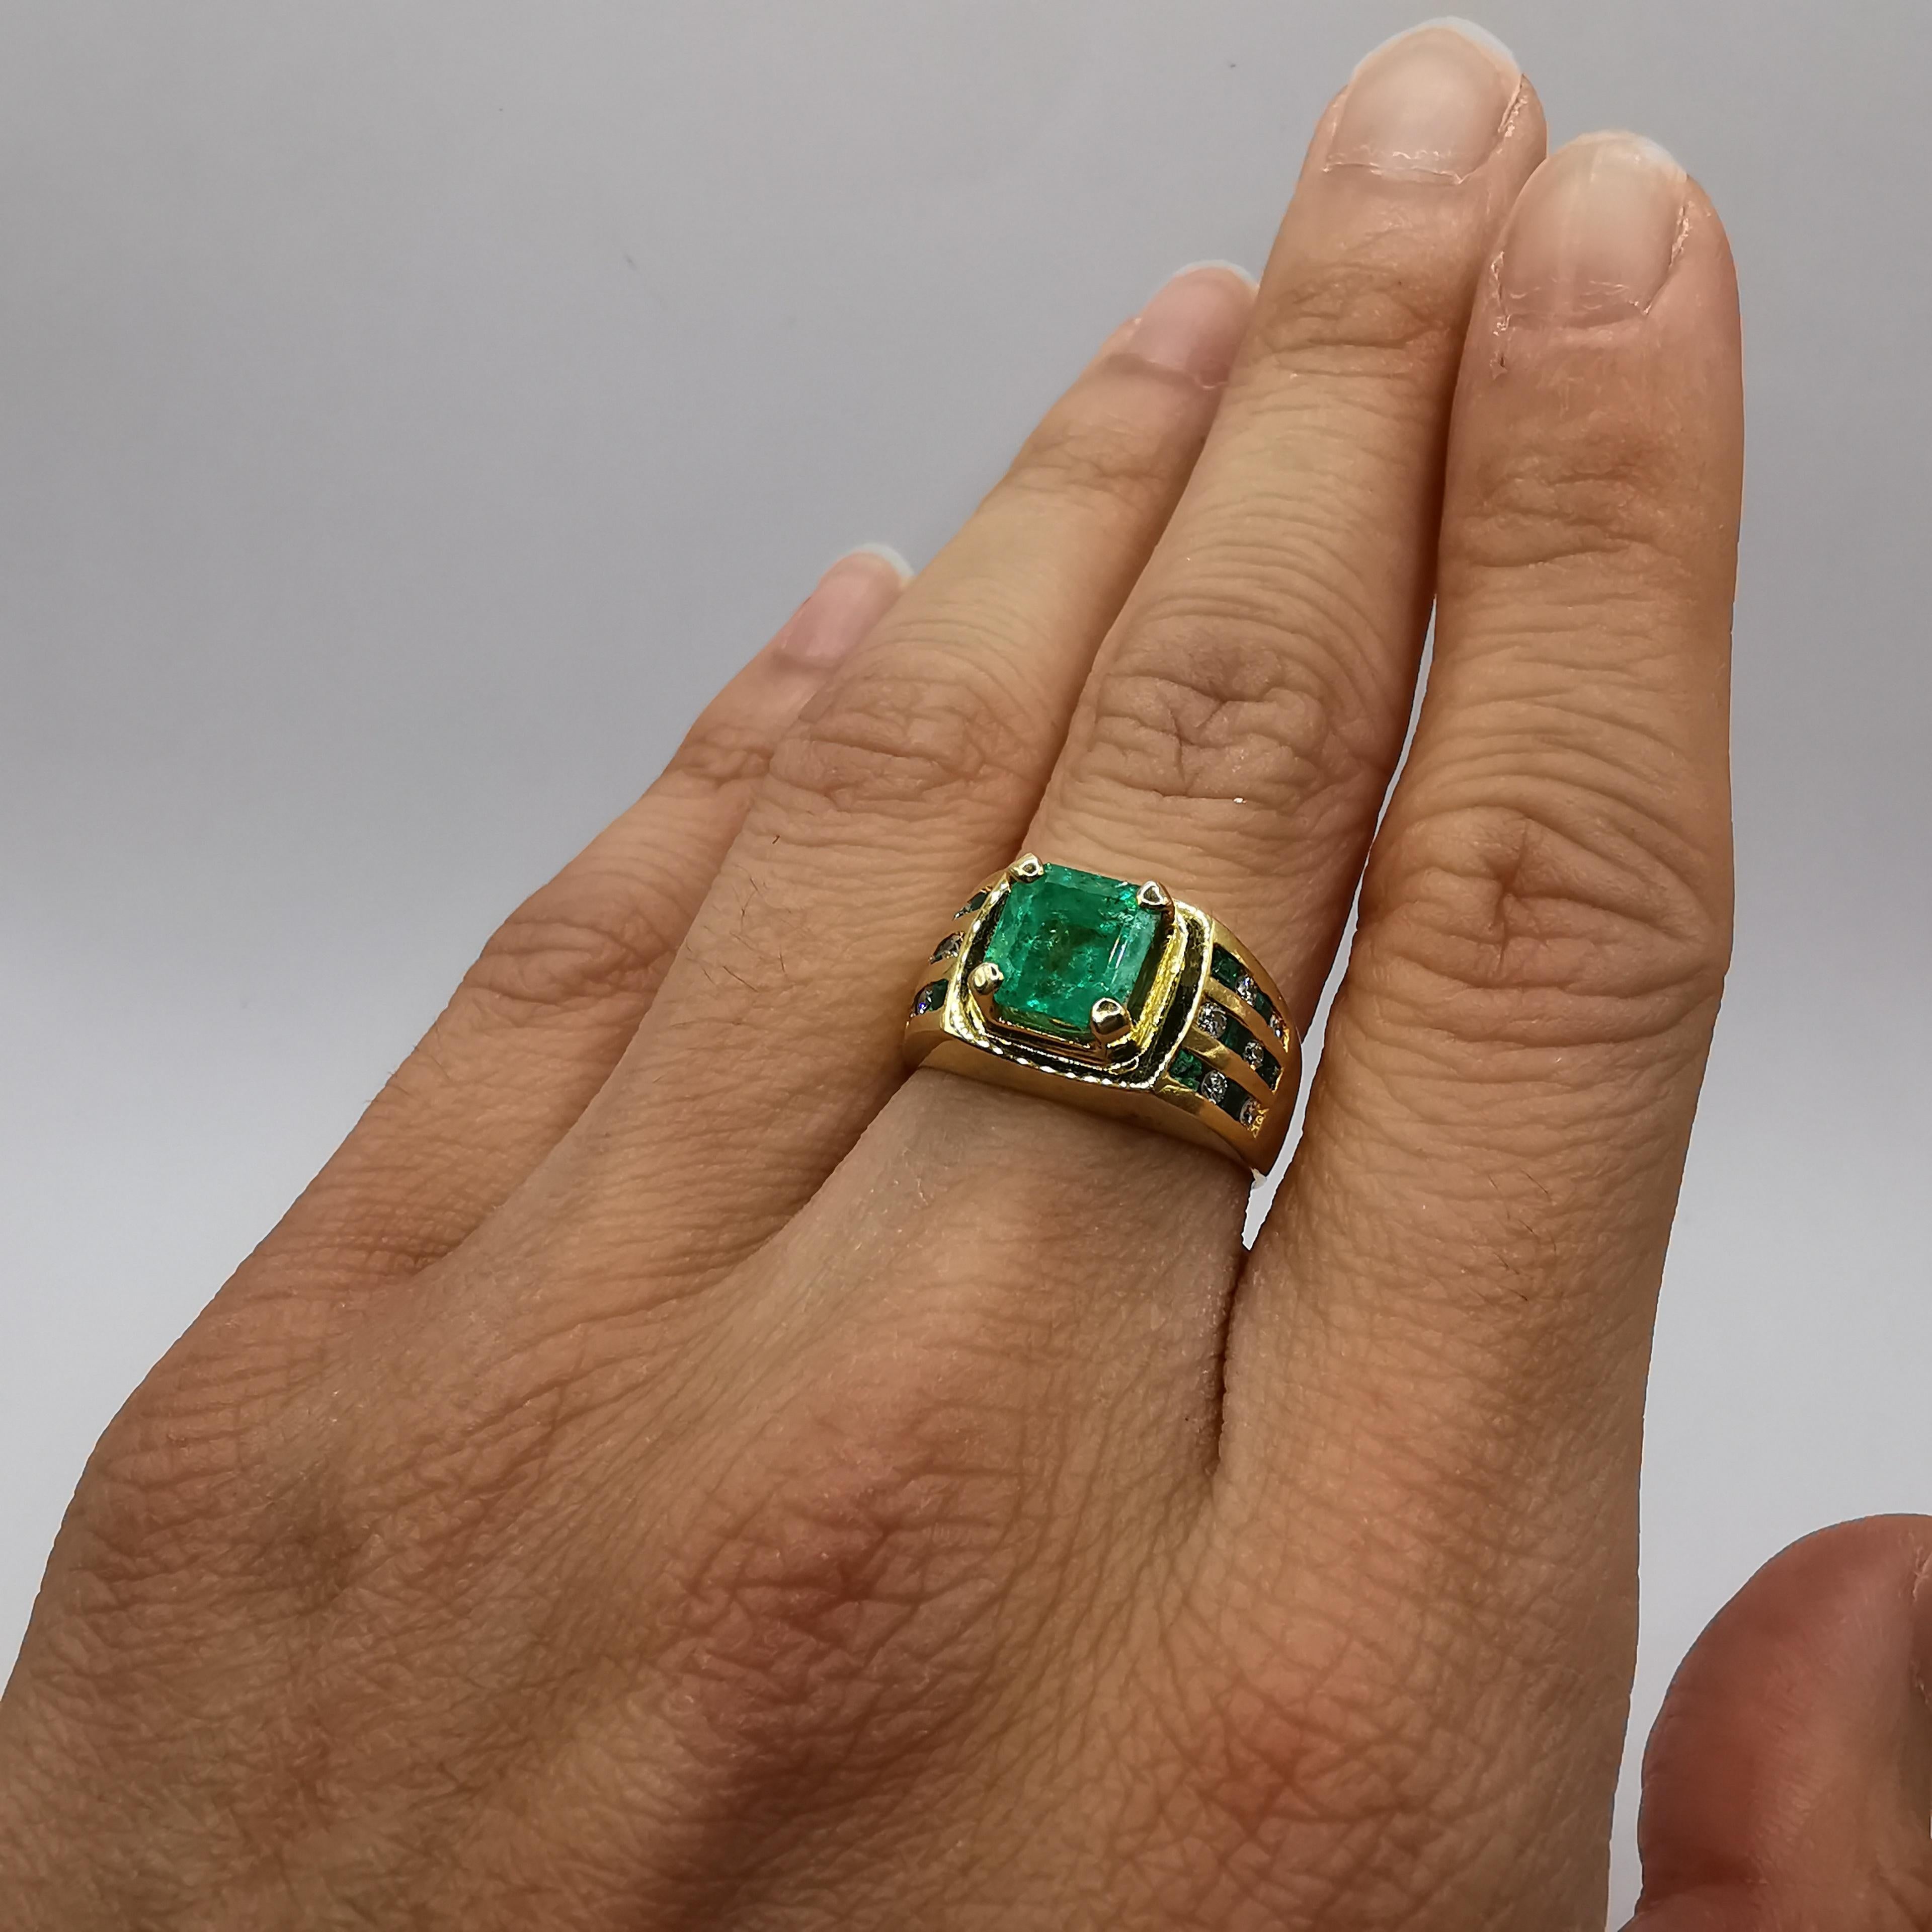 2.07 Carat Emerald Cut Emerald & Diamond Art Deco Men's Ring in 18K Yellow Gold For Sale 4